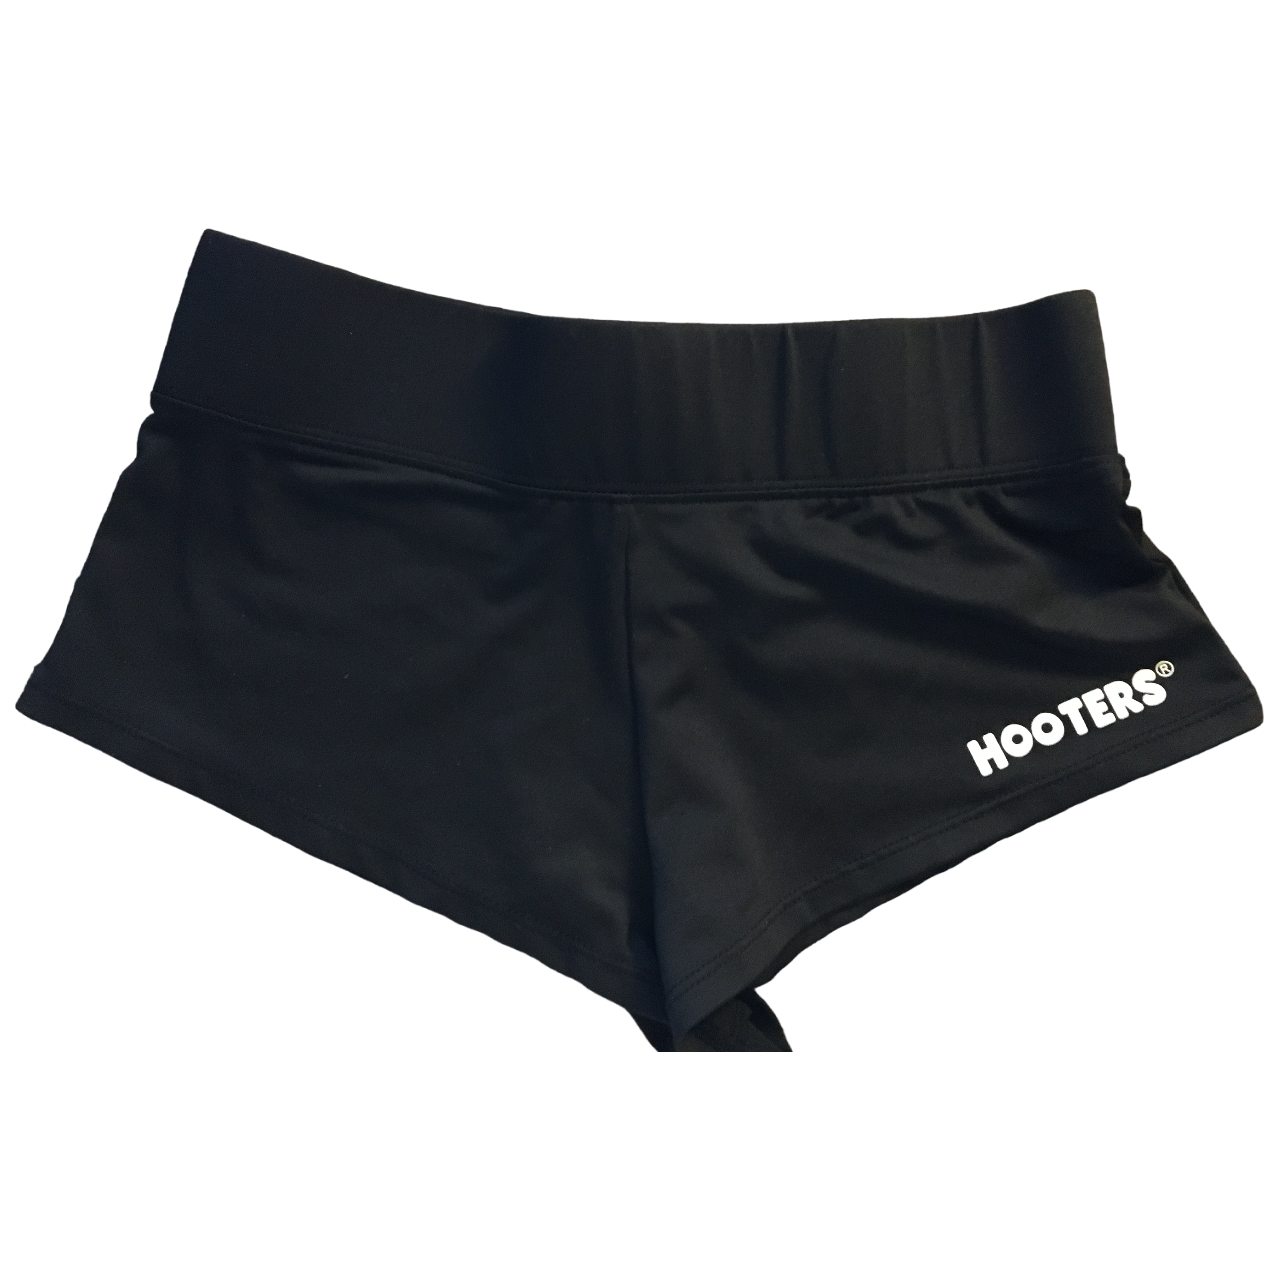 Hooters black cheeky shorts